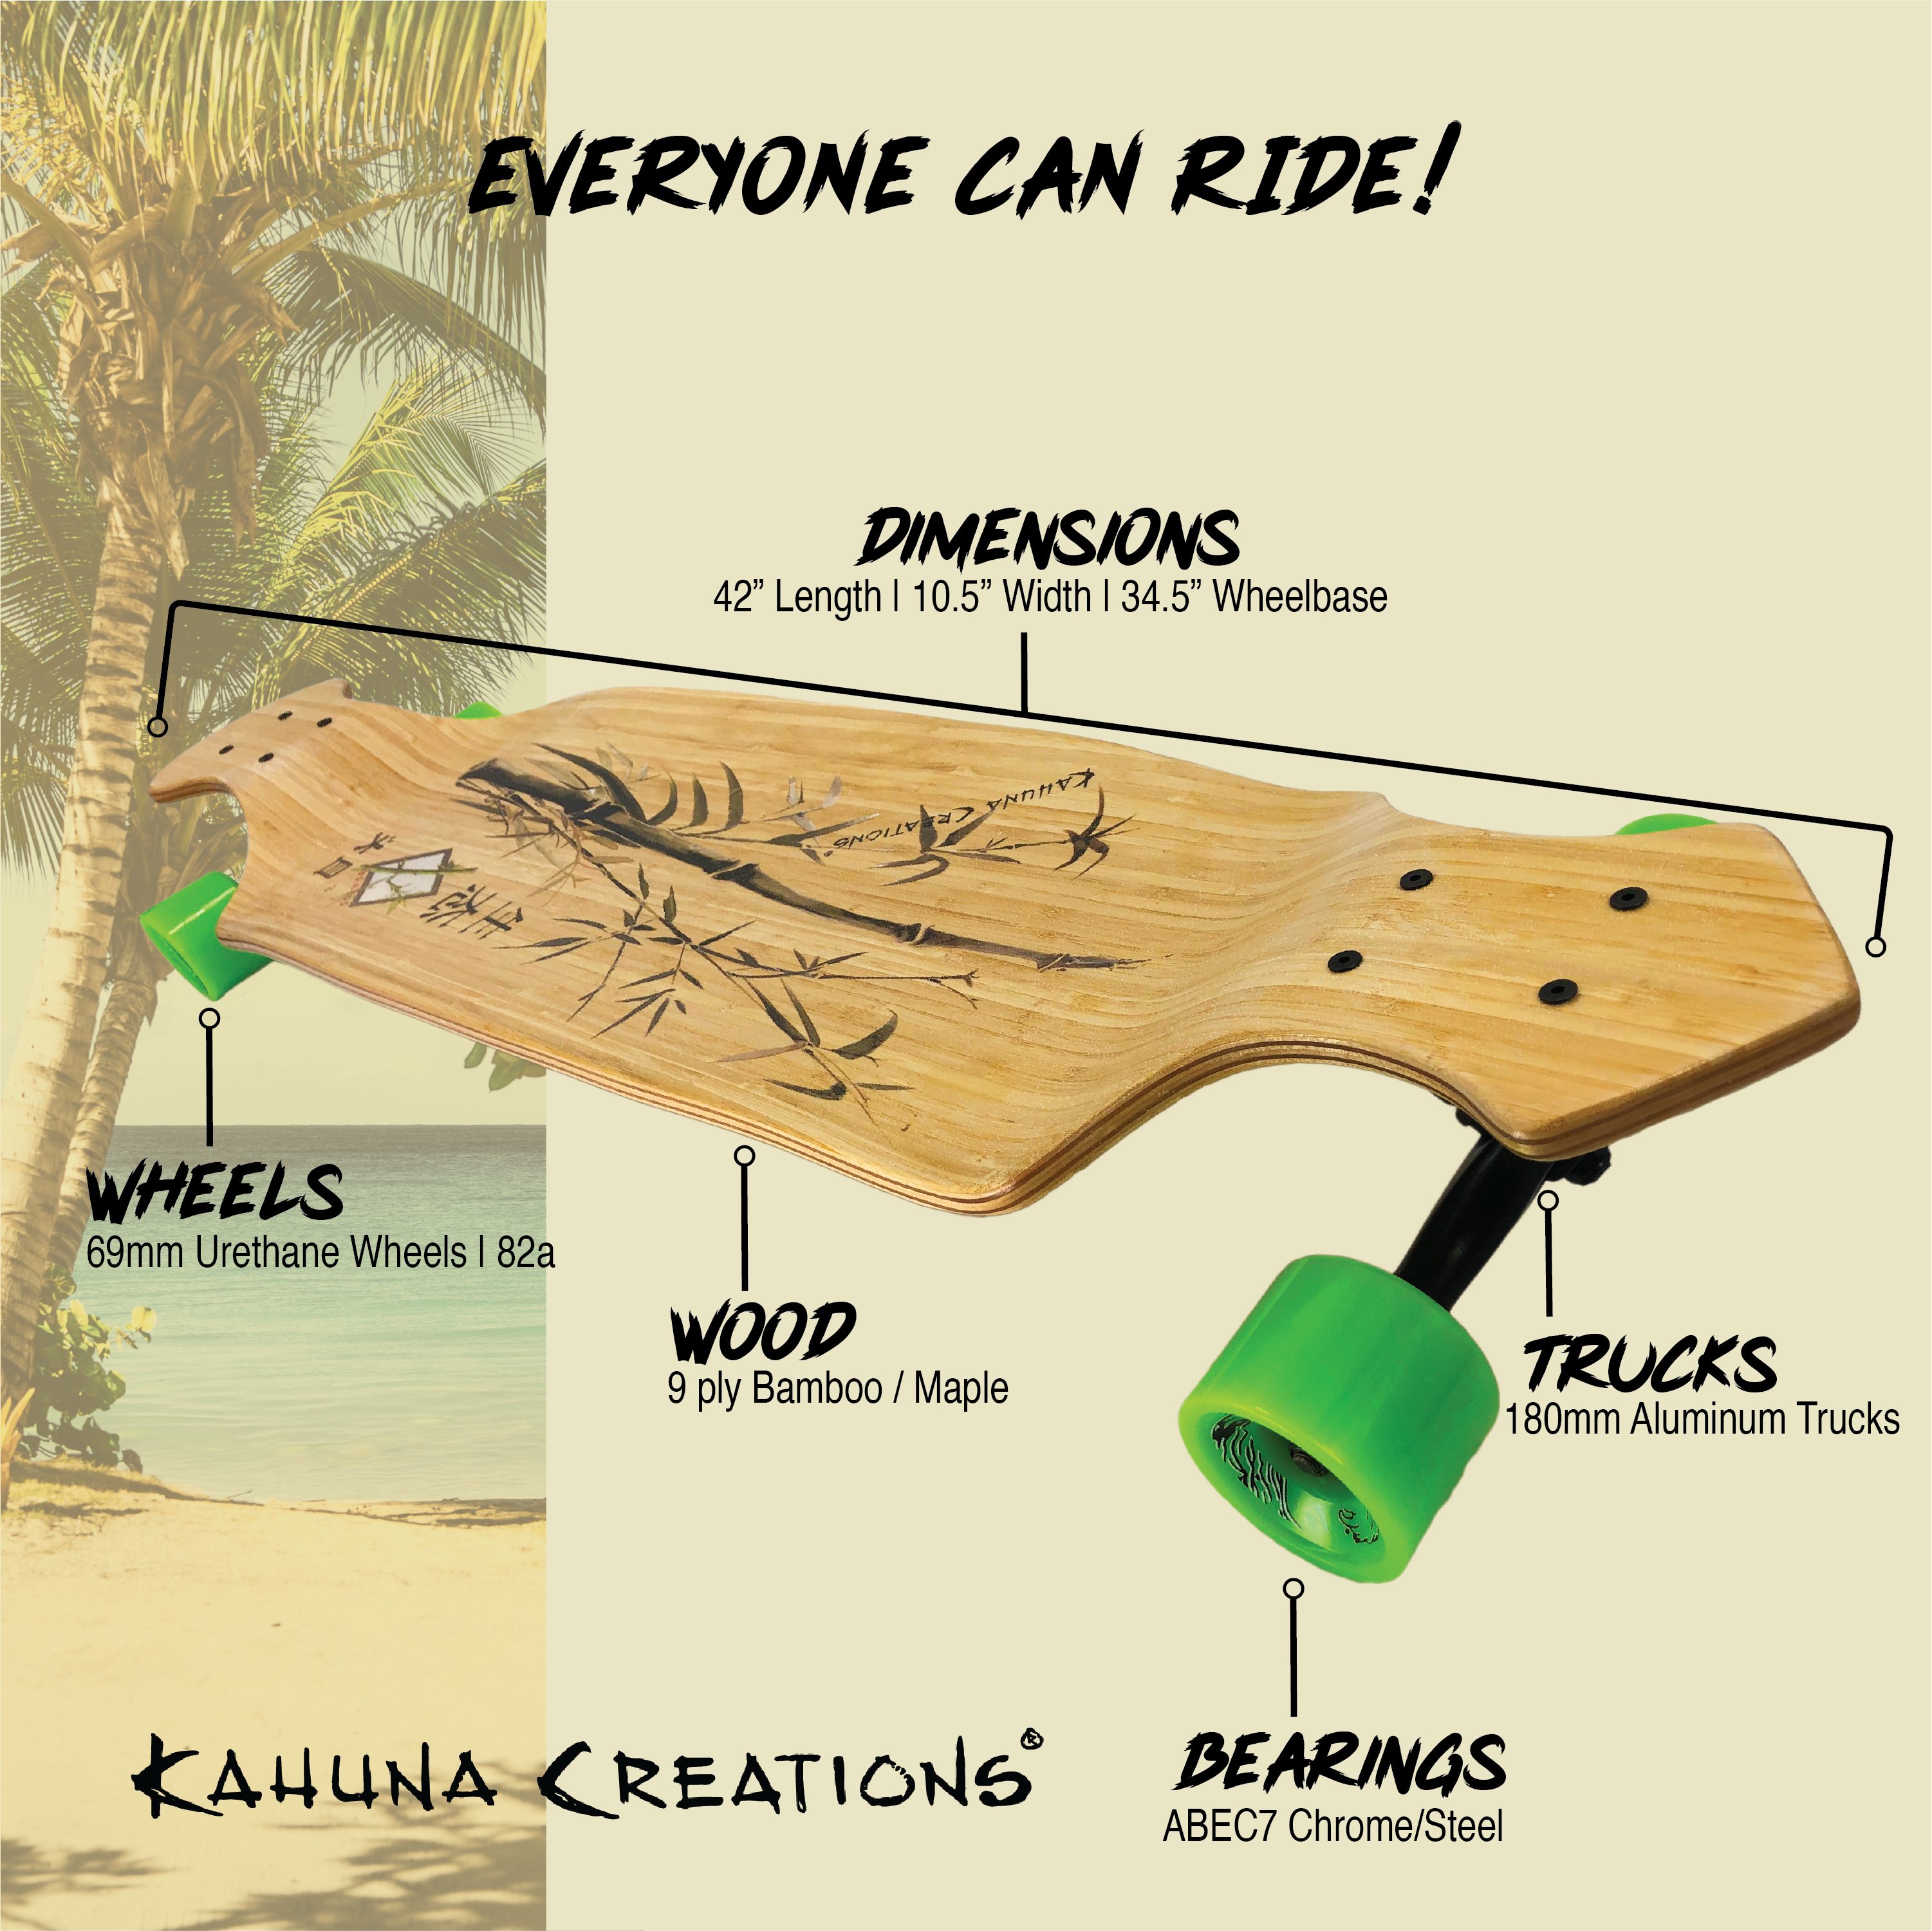 Kahuna Creations Bamboo Drop Deck 42", Bear Trucks Land Paddle Board, Longboards